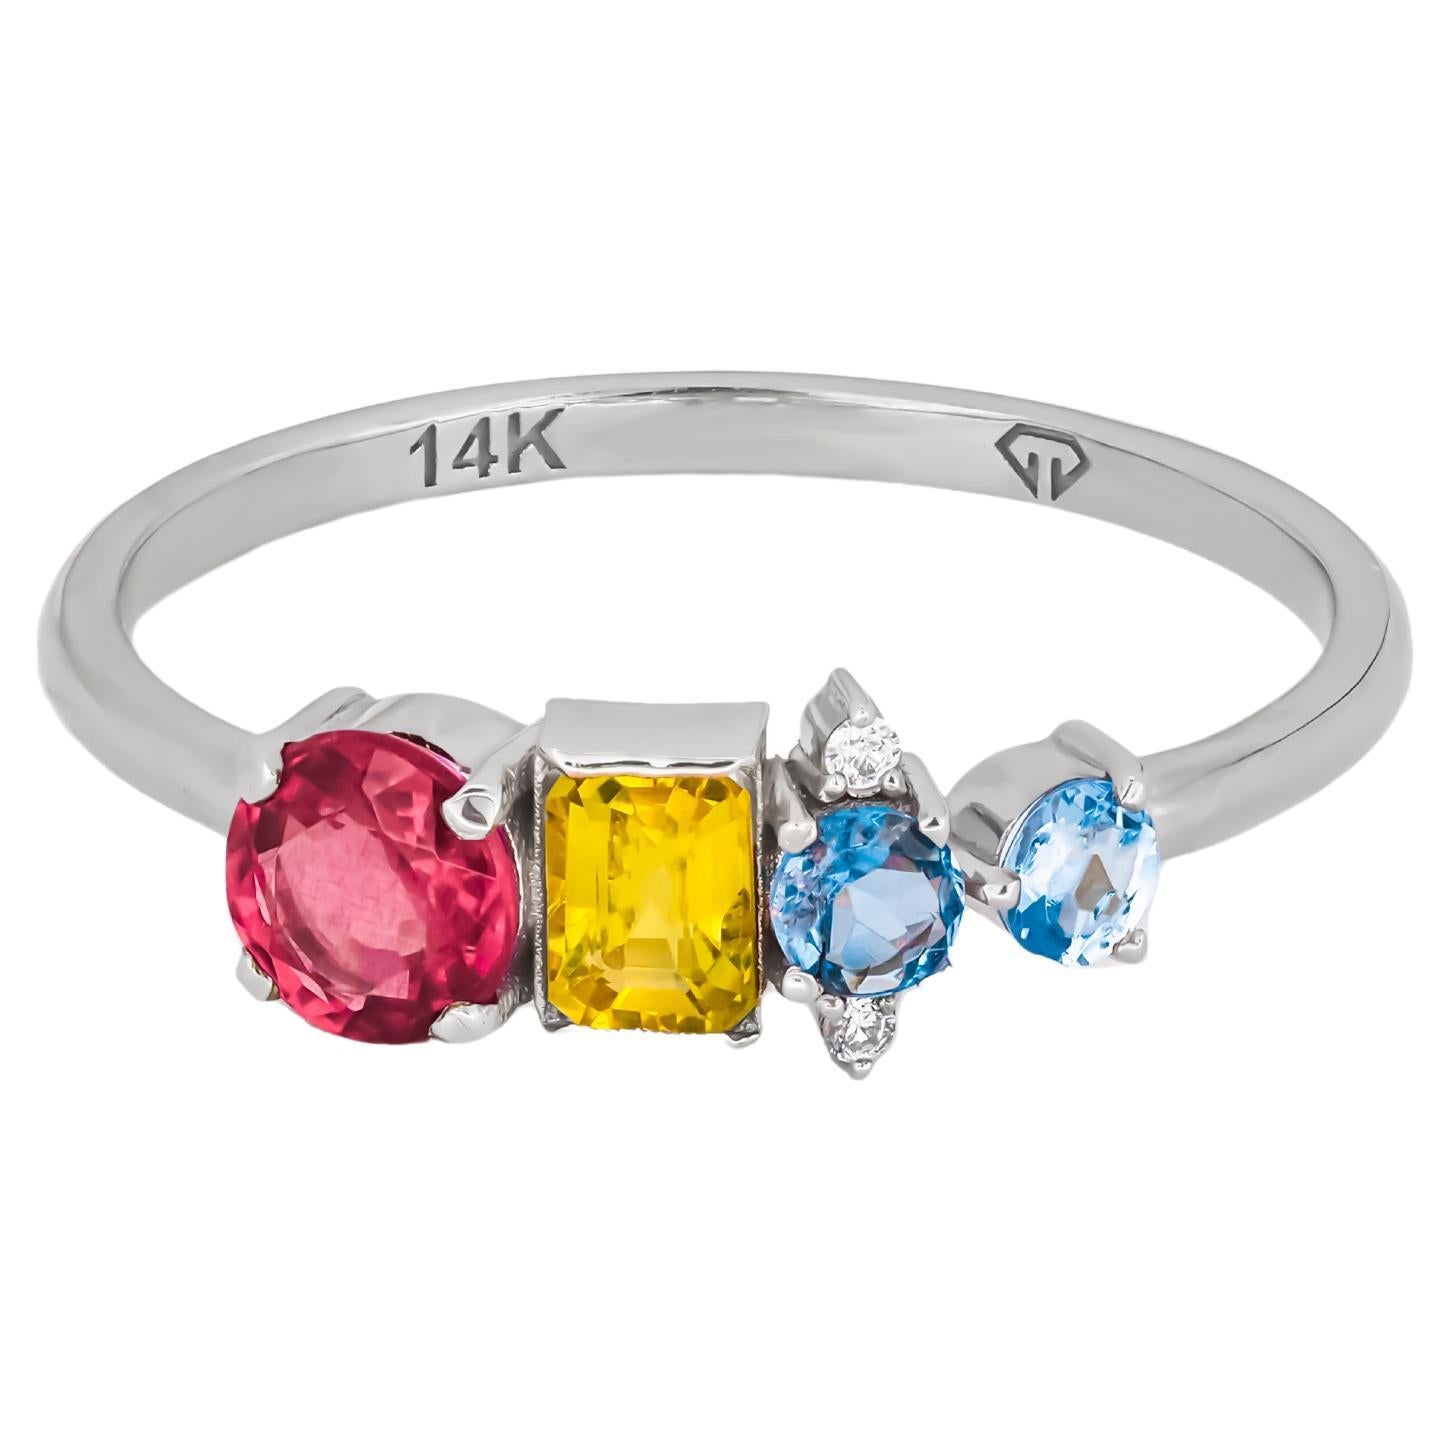 Multicolor gemstone 14k gold ring. For Sale